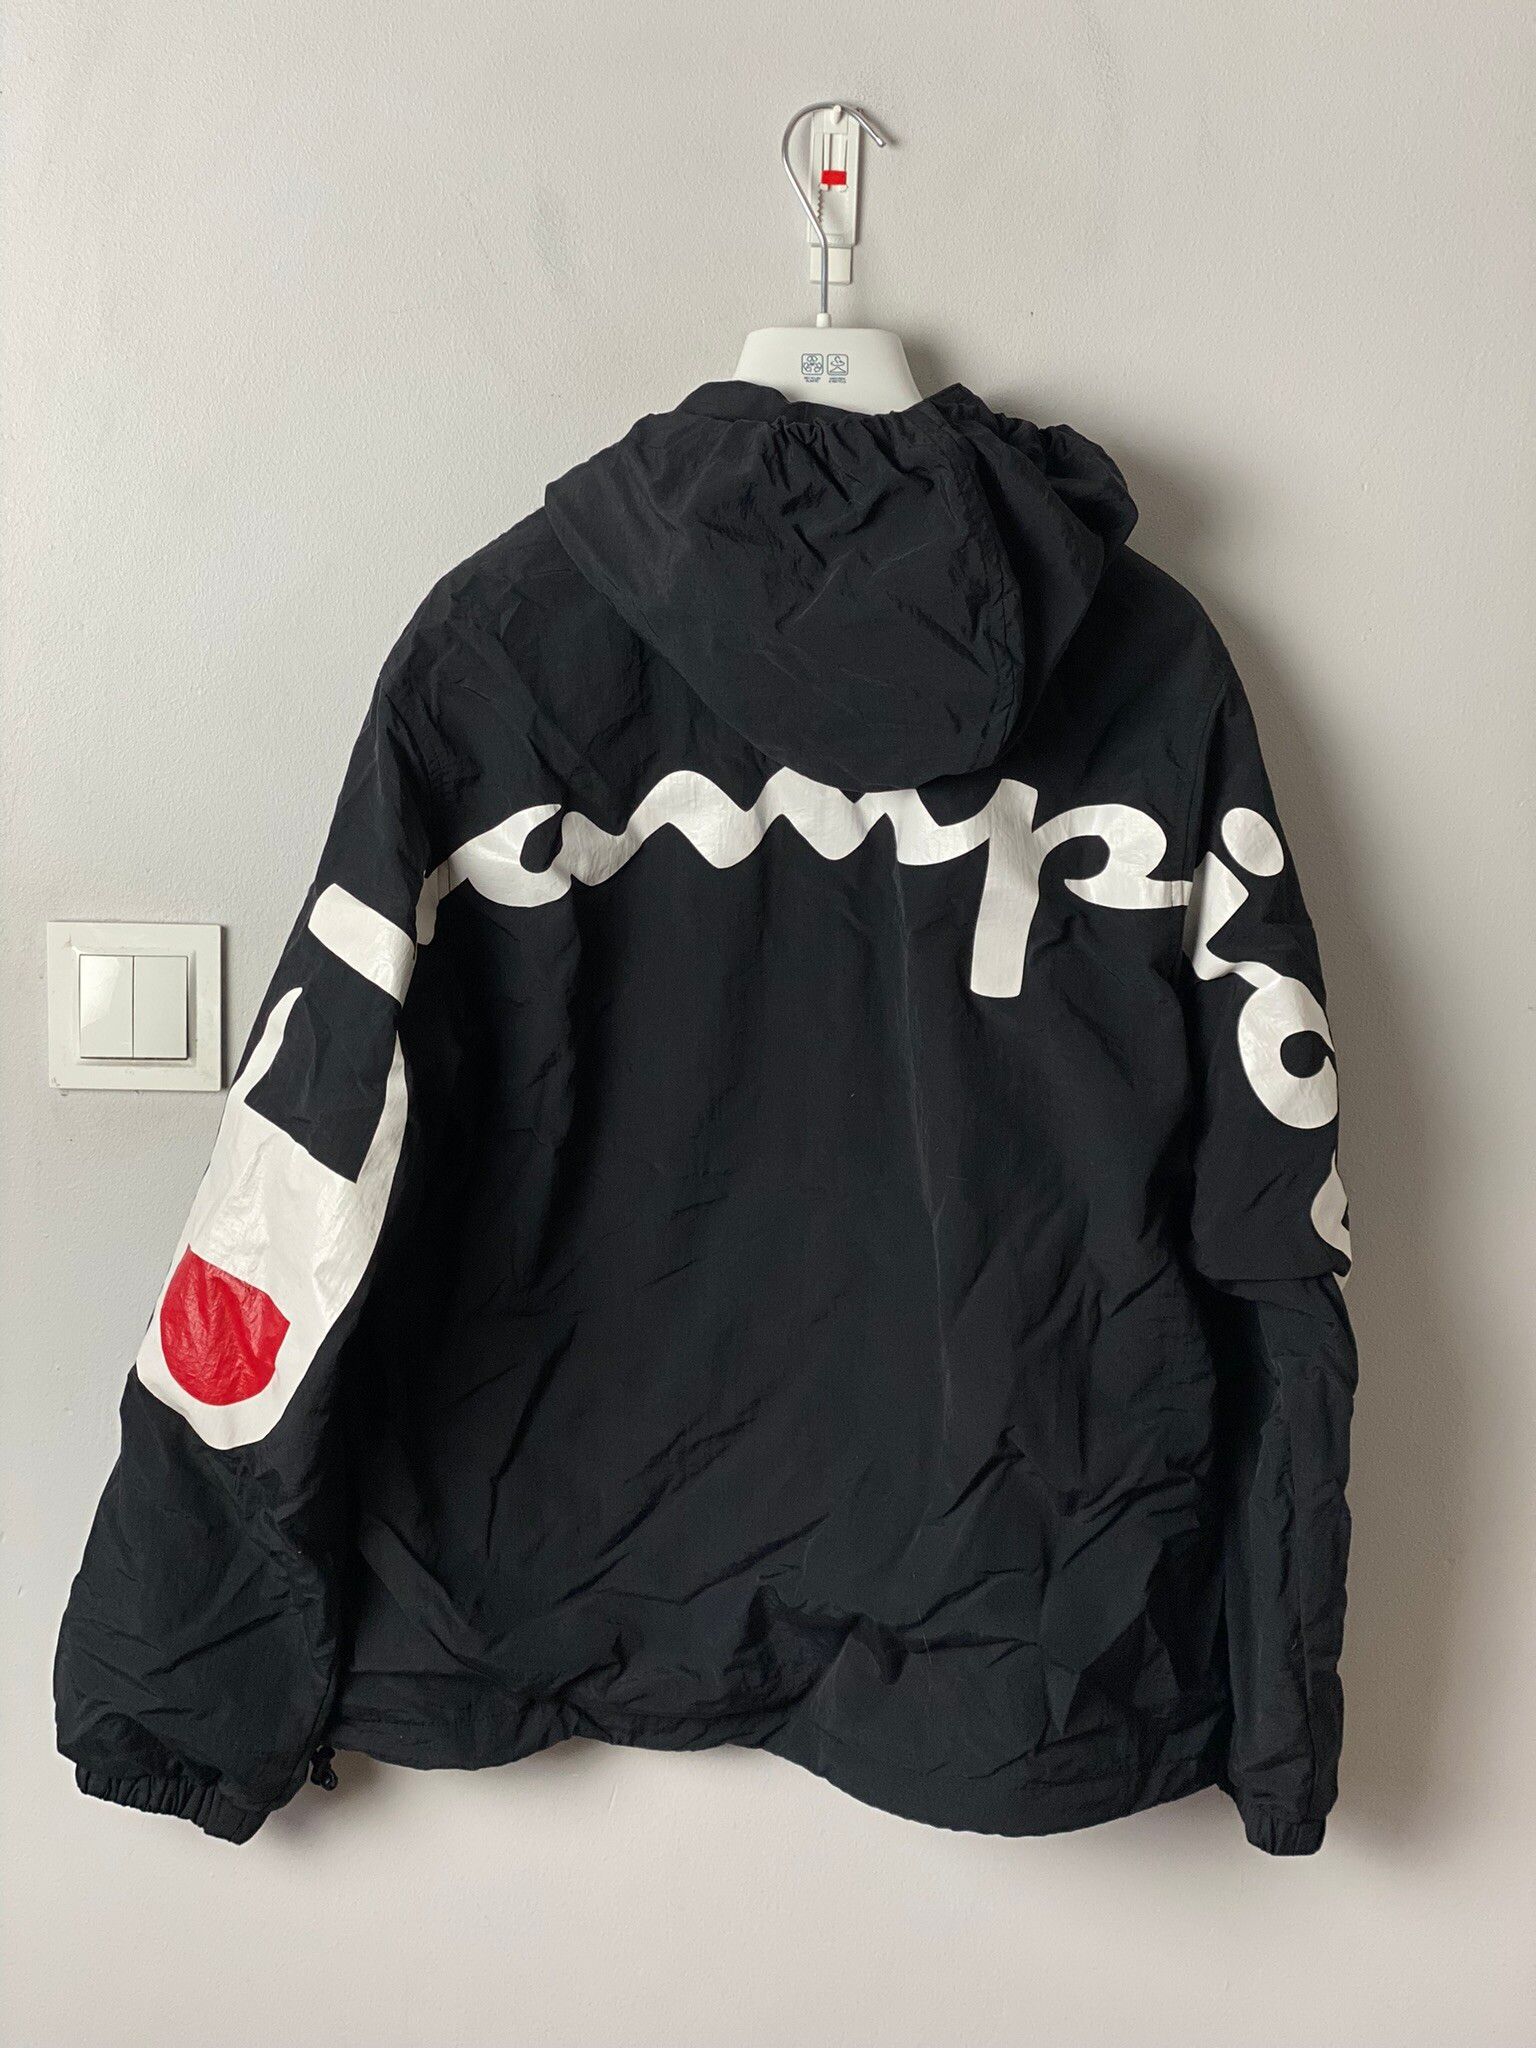 Supreme Supreme x Champion track jacket big logo | Grailed